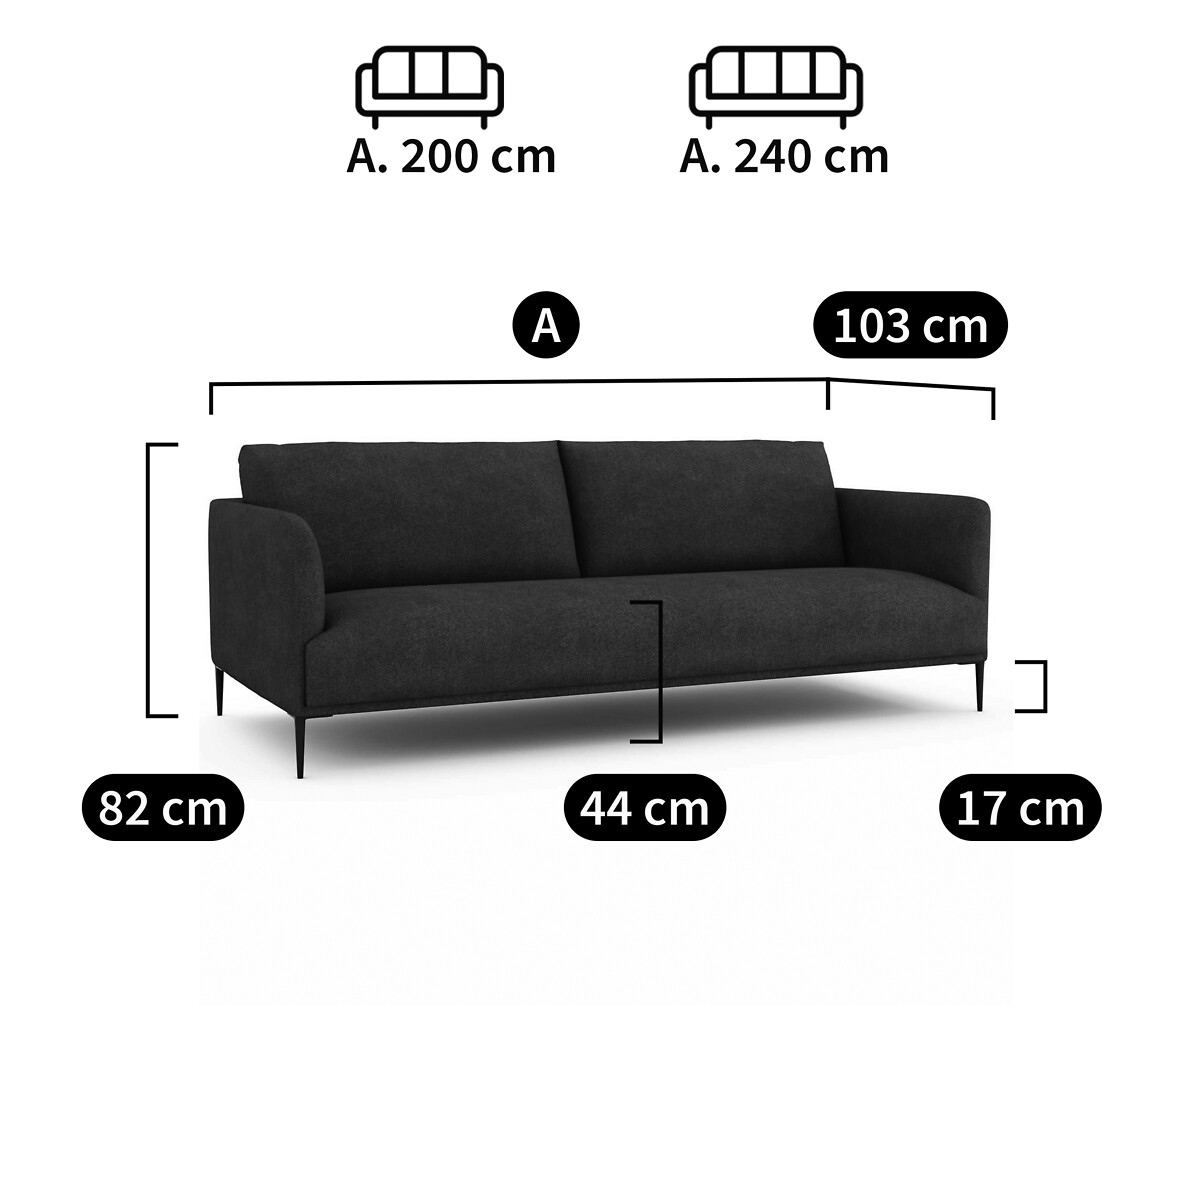 Sofa Oscar, Natté meliert, Design by E. Gallina von AM.PM